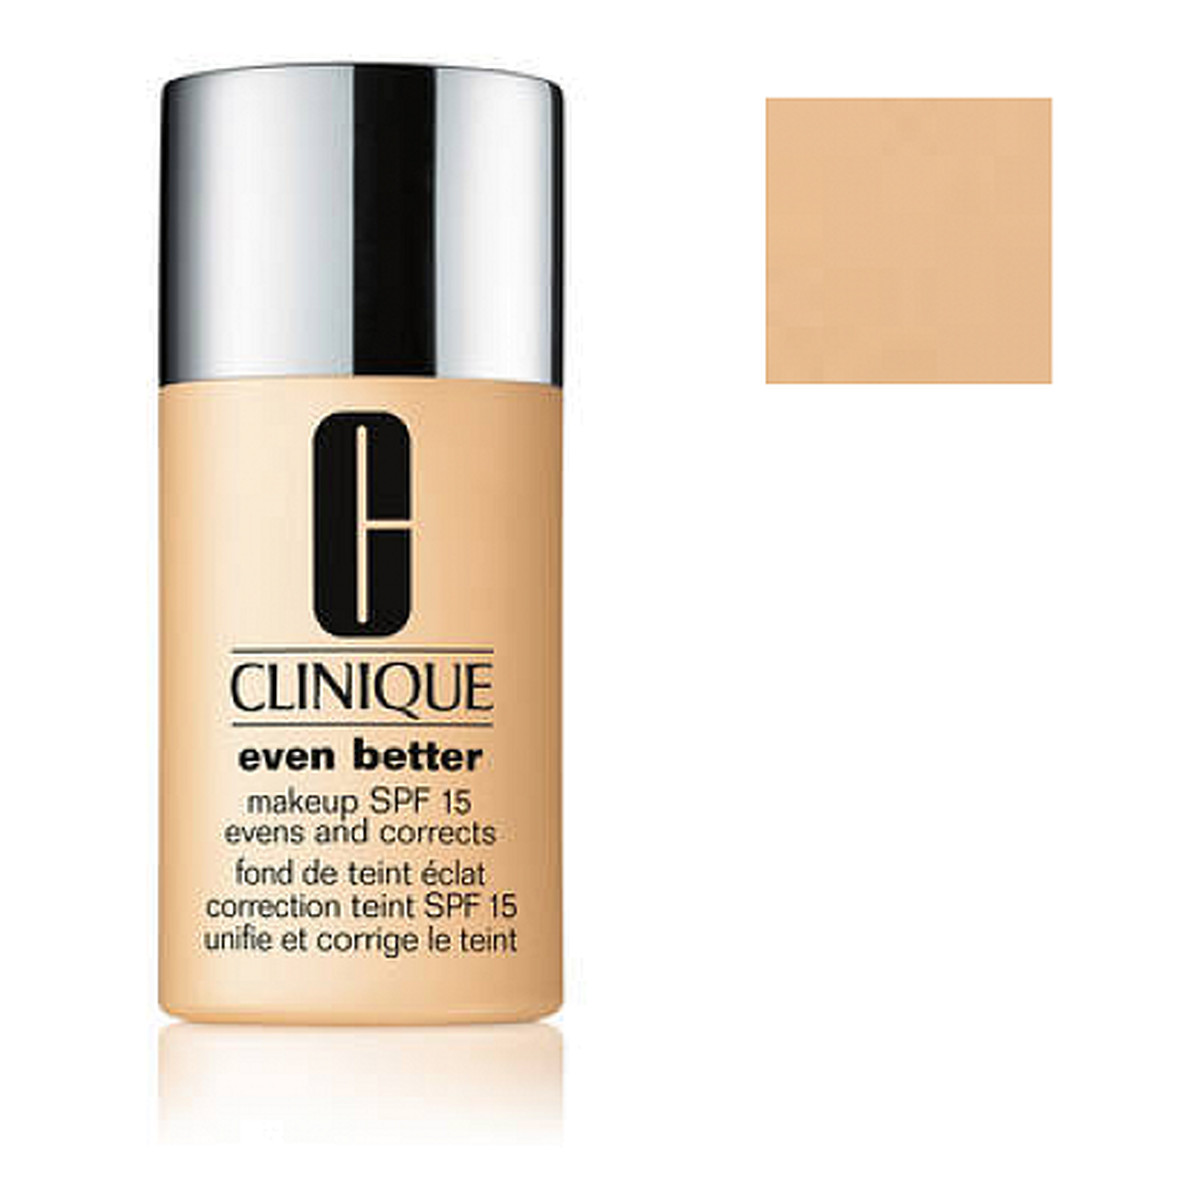 Clinique Even Better Makeup SPF15 Evens And Corrects Podkład wyrównujący koloryt skóry 30ml